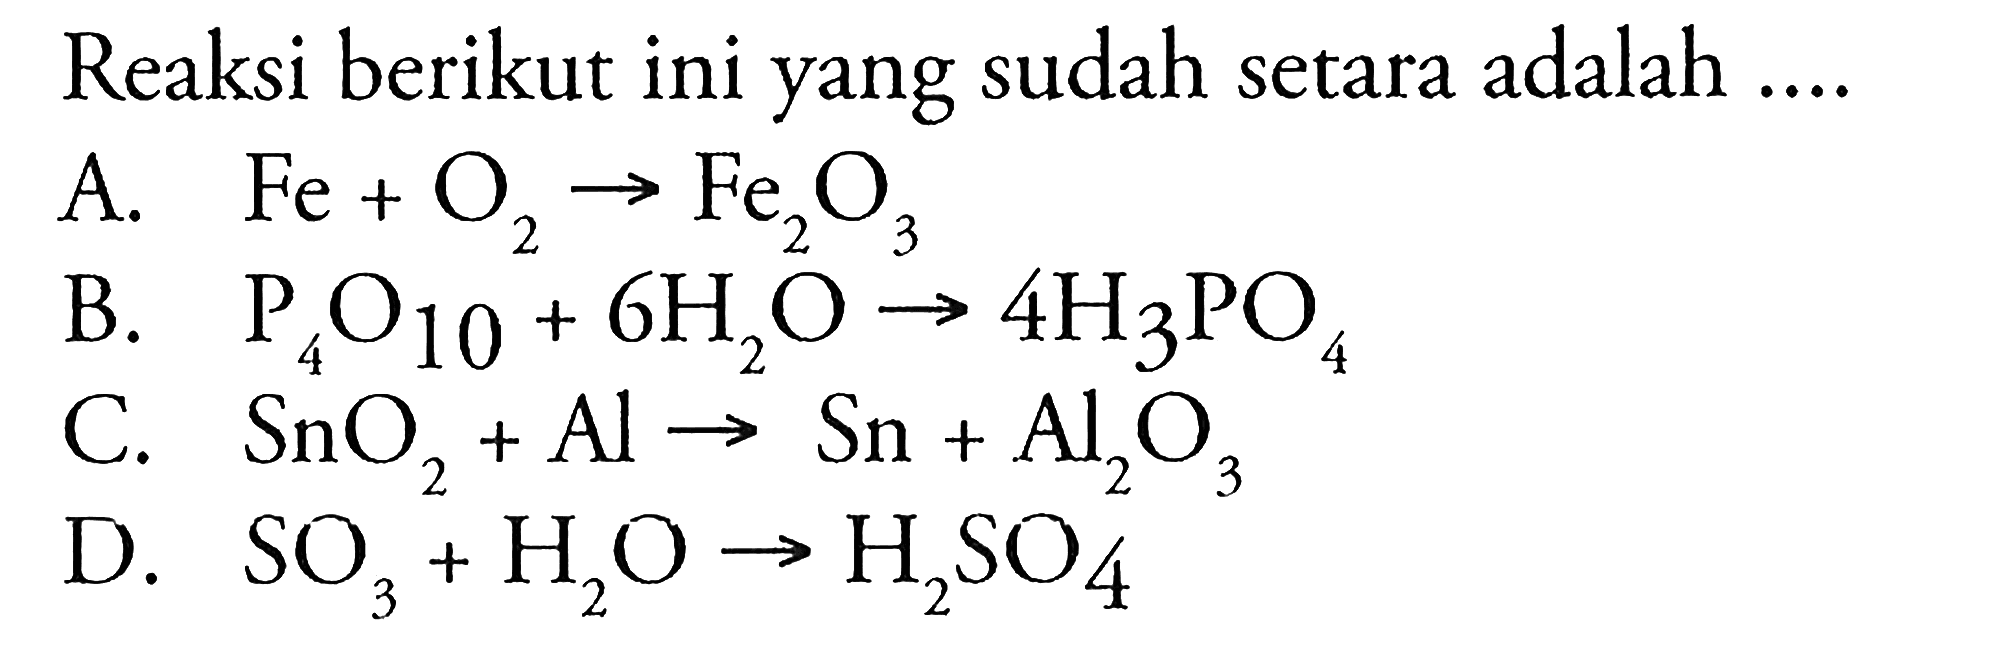 Reaksi berikut ini yang sudah setara adalah .... 
A. Fe + O2 -> Fe2O3 
B. P4O10 + 6H2O -> 4H3PO4 
C. SnO2 + Al -> Sn + Al2O3 
D. SO3 + H2O -> H2SO4